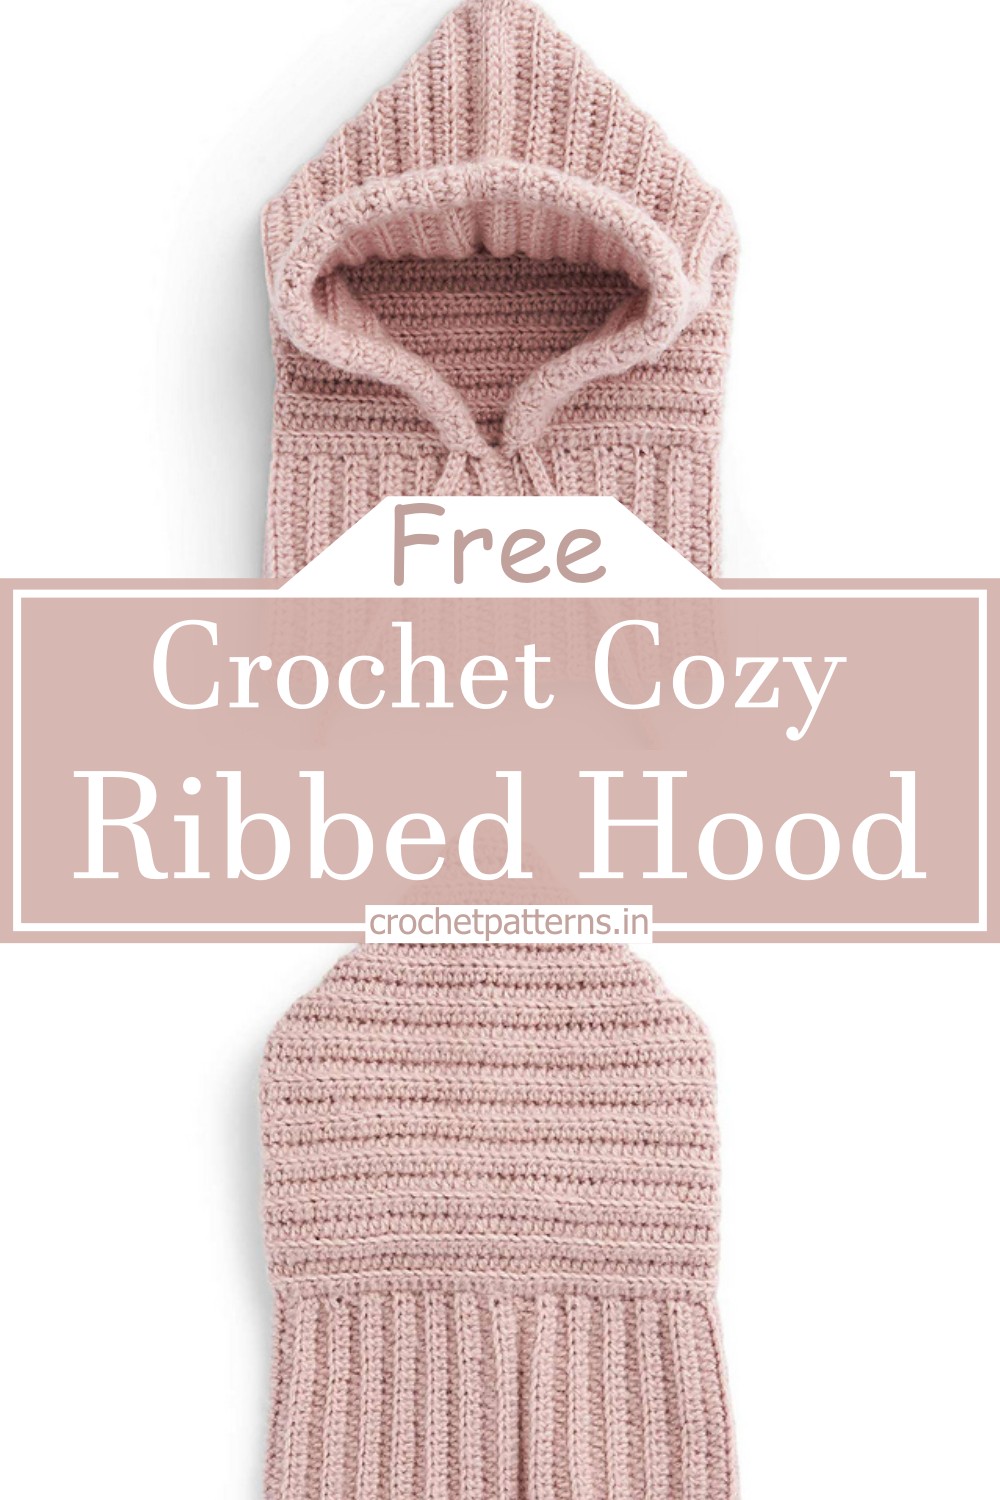 Cozy Ribbed Hood